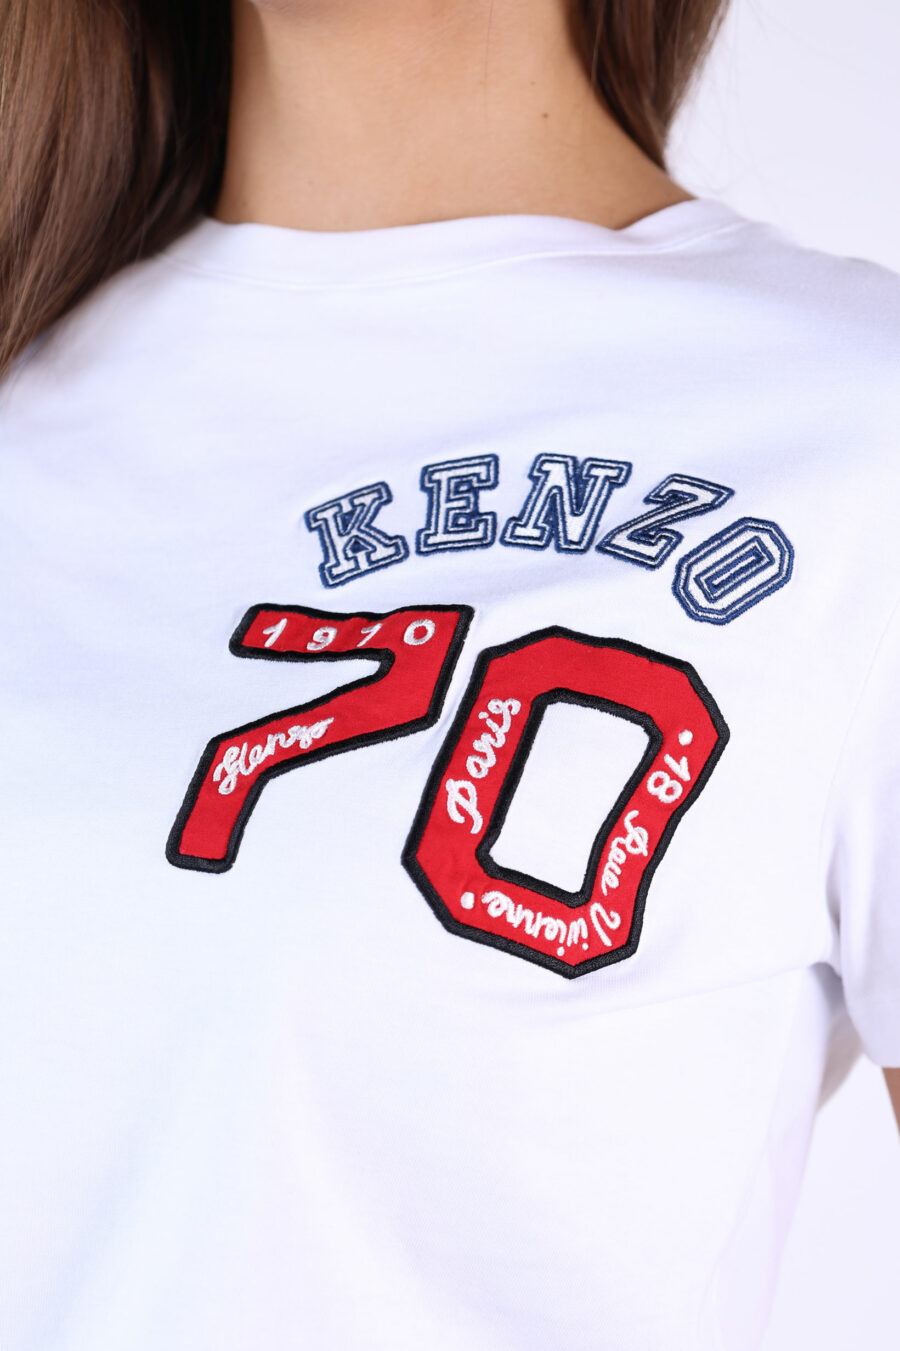 Camiseta blanca con logo "Kenzo Academy" - 361223054662201933 1